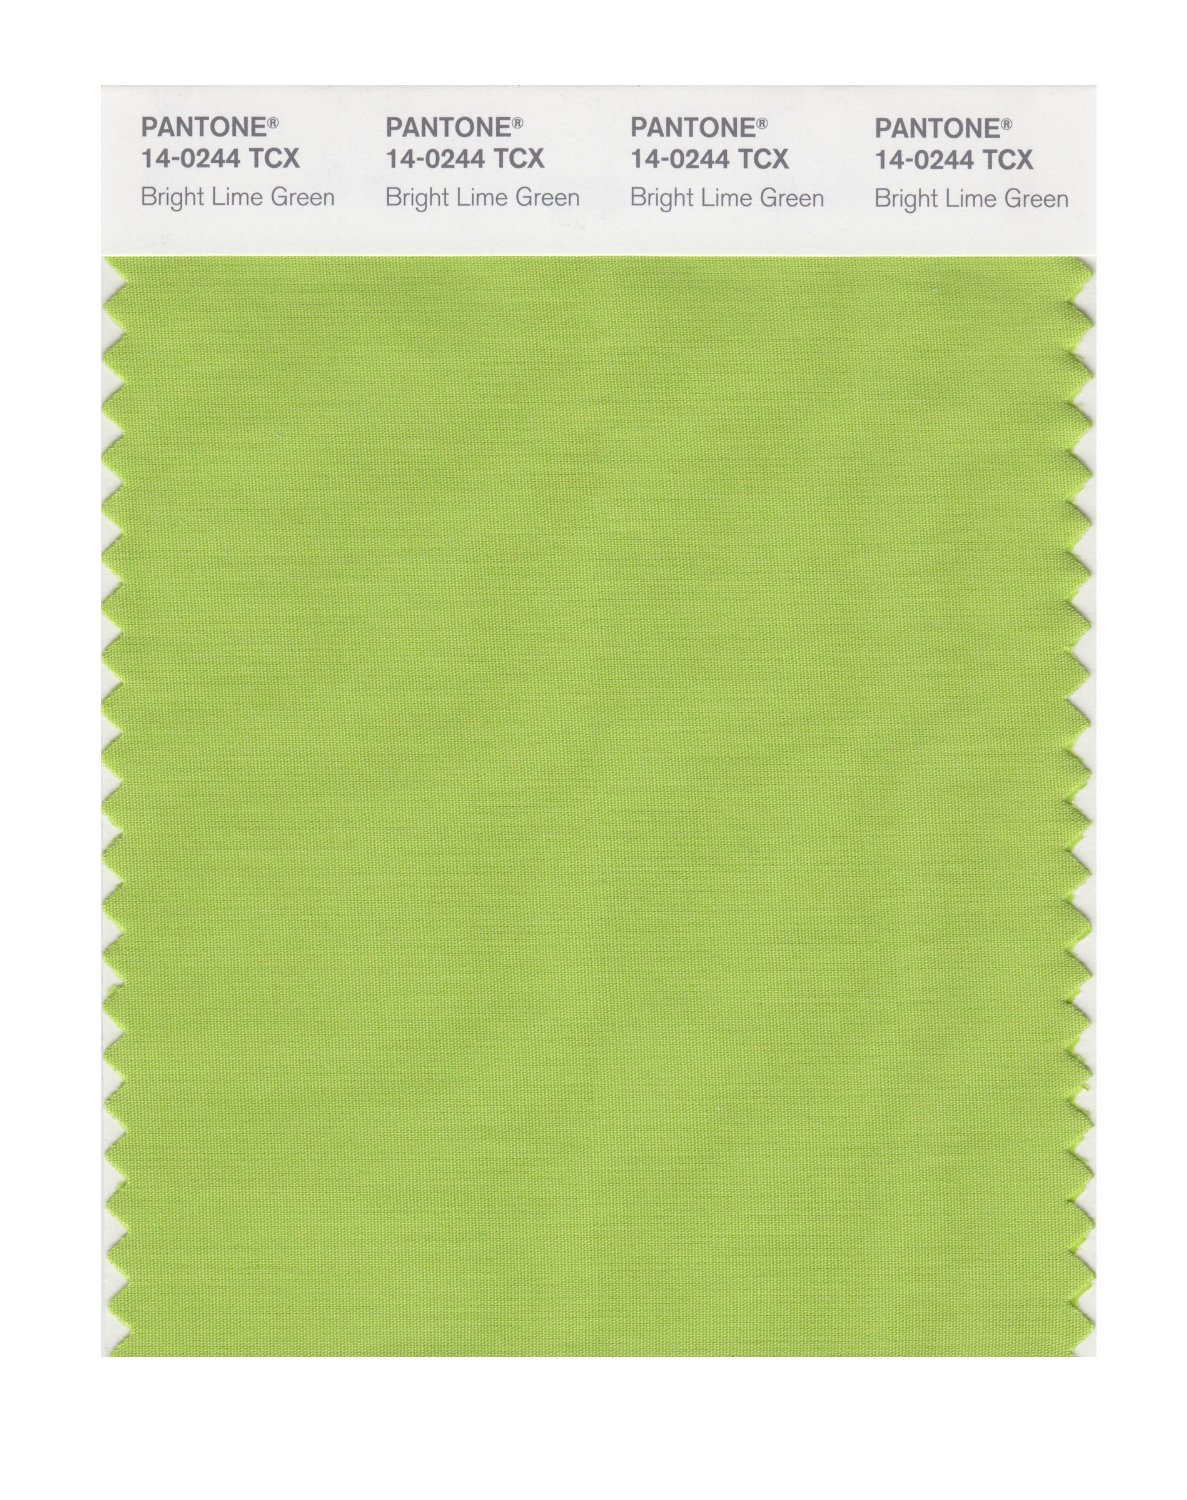 Pantone Cotton Swatch 14-0244 Brt Lime Green